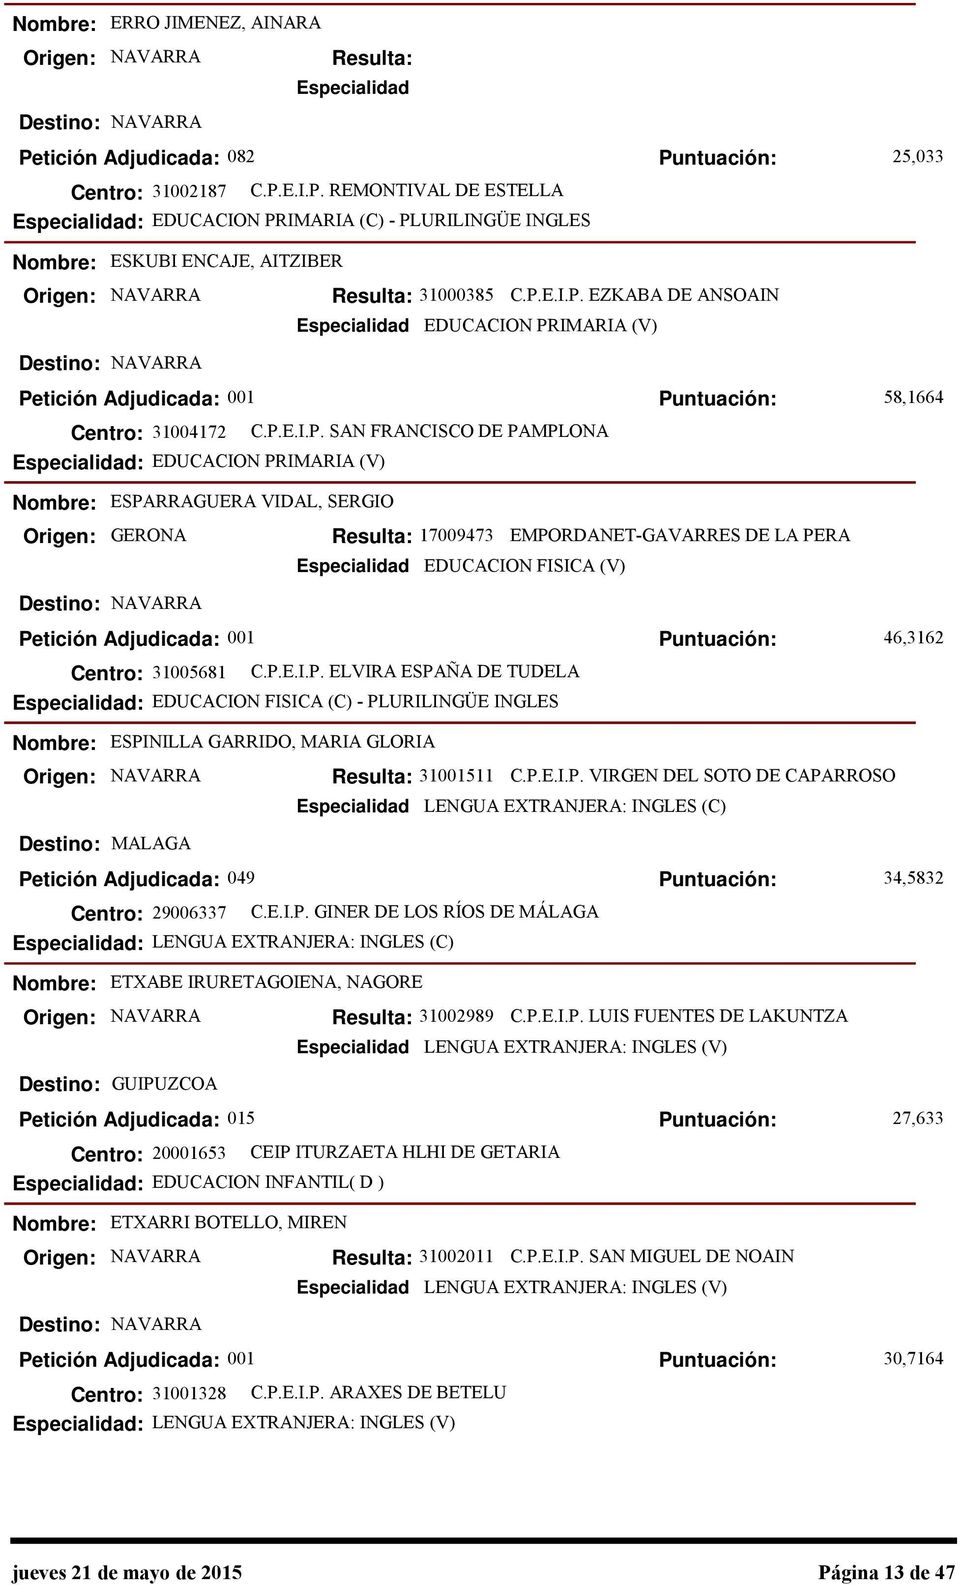 P.E.I.P. VIRGEN DEL SOTO DE CAPARROSO LENGUA EXTRANJERA: INGLES (C) MALAGA Petición Adjudicada: 049 Centro: 29006337 C.E.I.P. GINER DE LOS RÍOS DE MÁLAGA : LENGUA EXTRANJERA: INGLES (C) 34,5832 ETXABE IRURETAGOIENA, NAGORE 31002989 C.